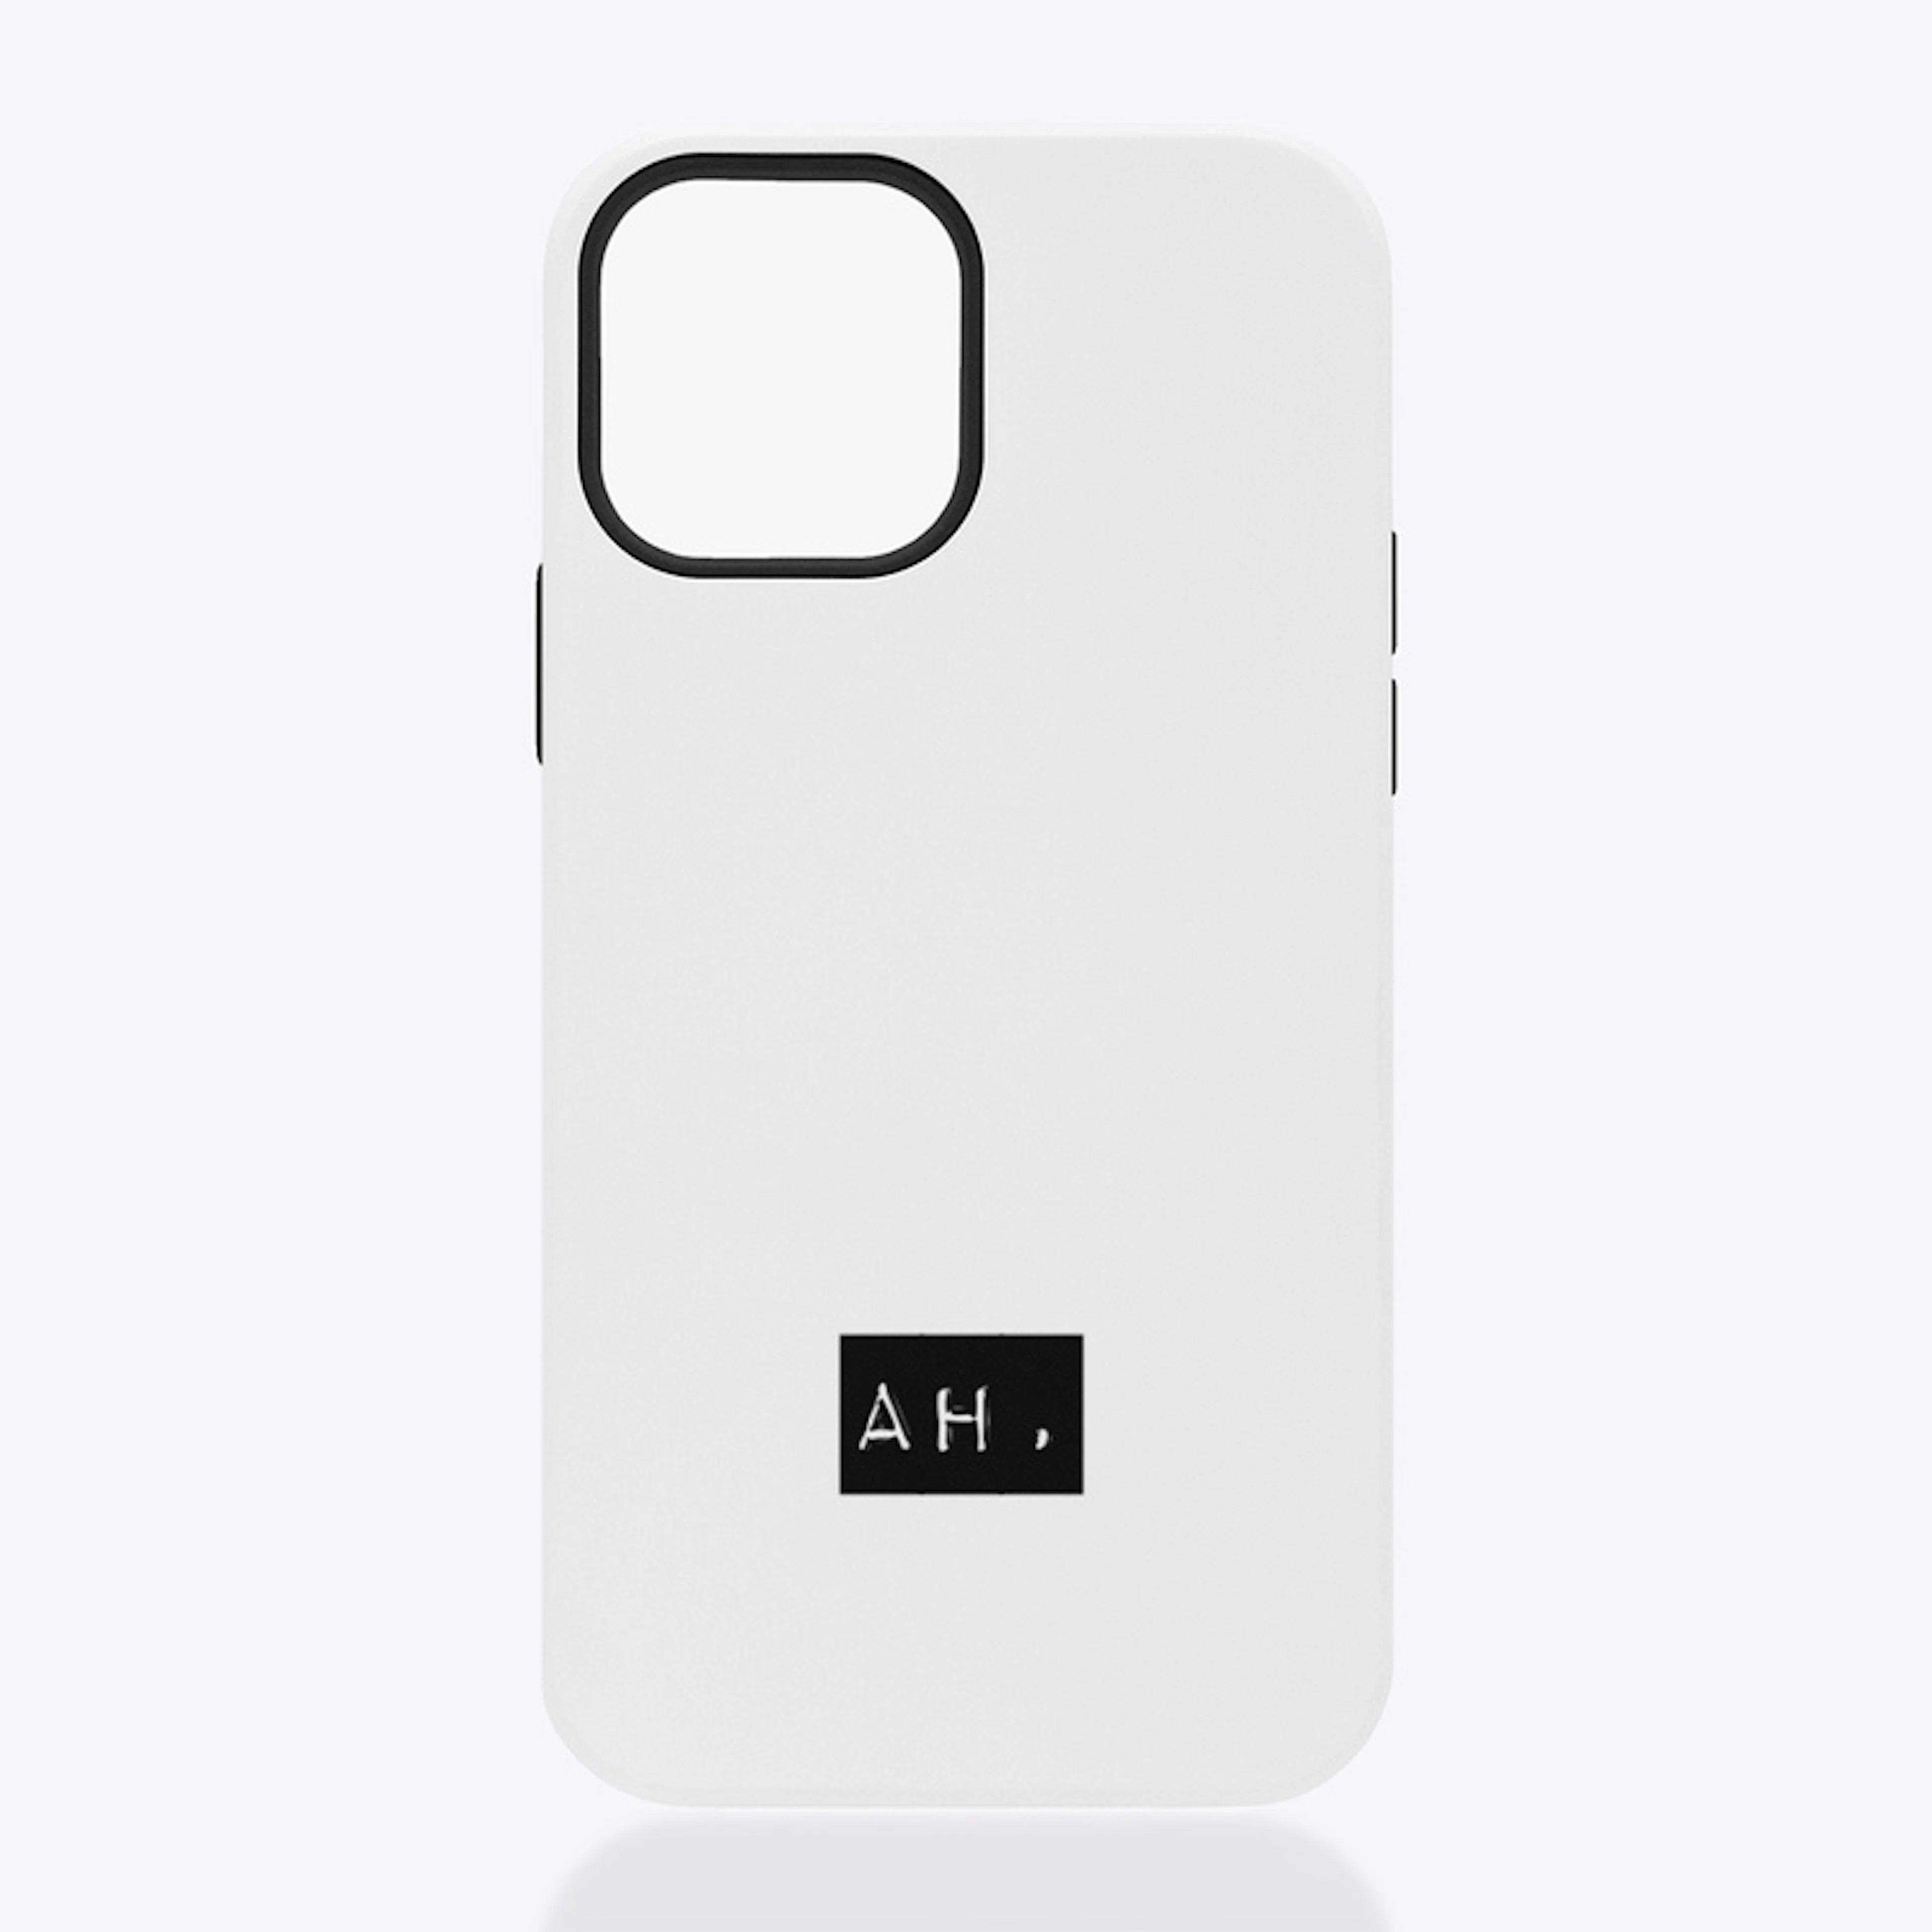 AH, - iPhone case